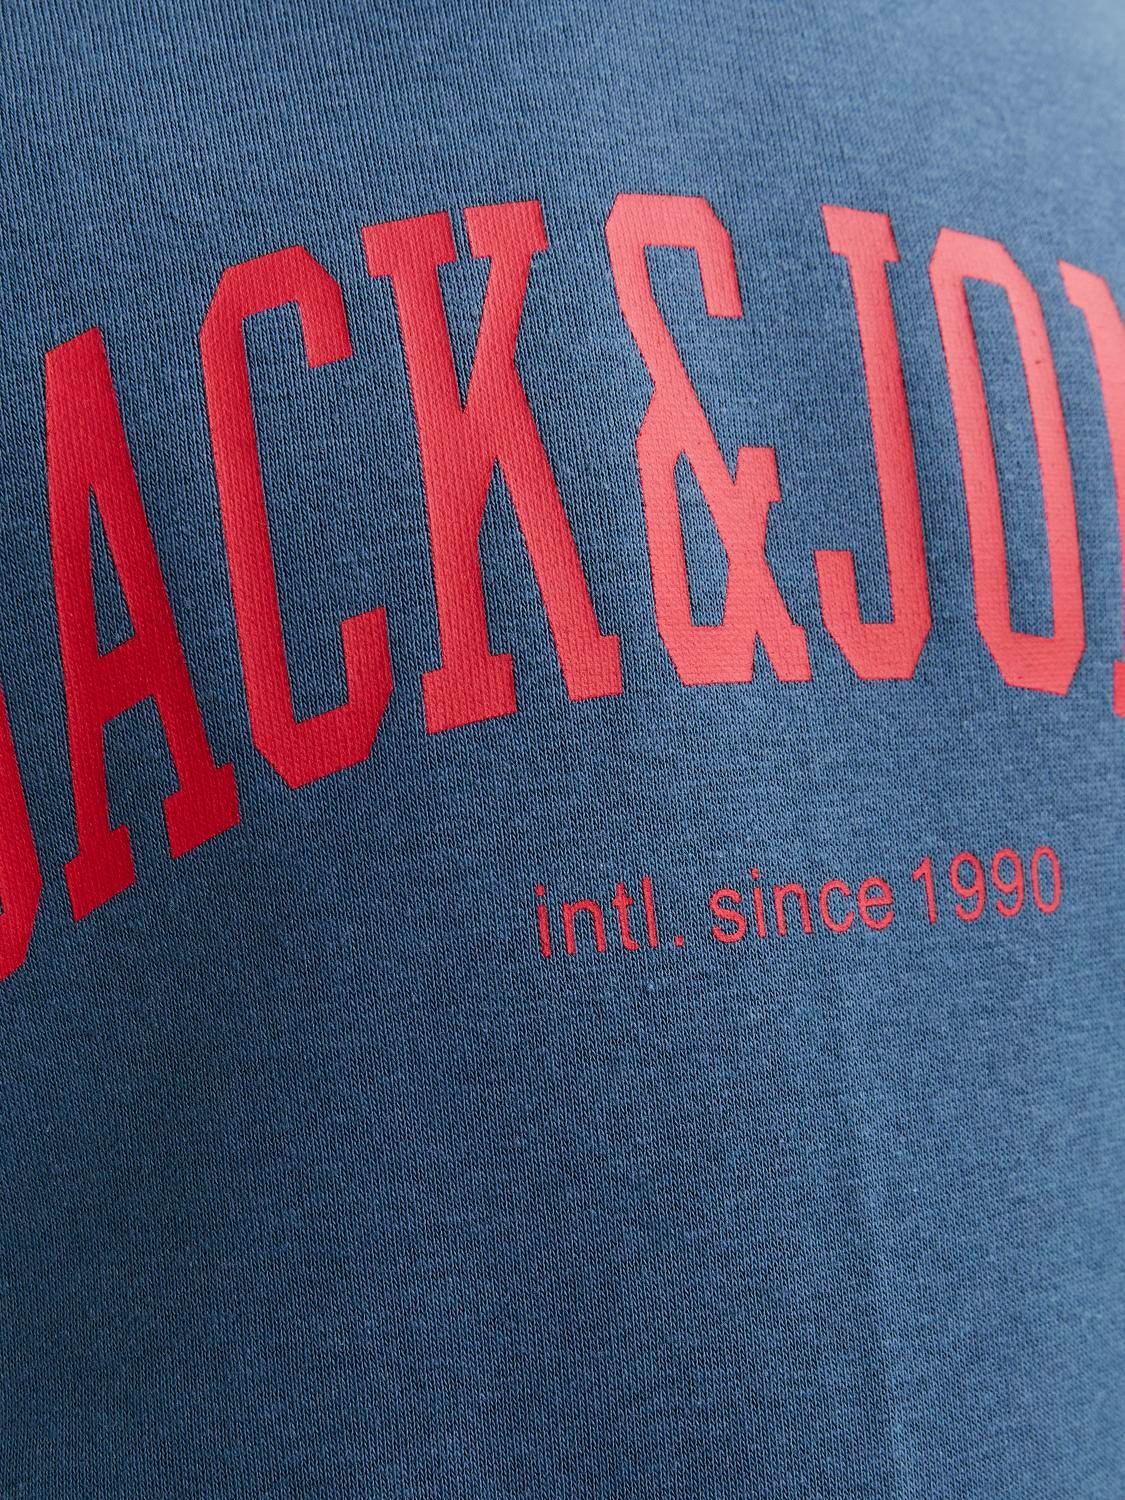 Jack & Jones Hoodie Logo Para meninos -Ensign Blue - 12237401